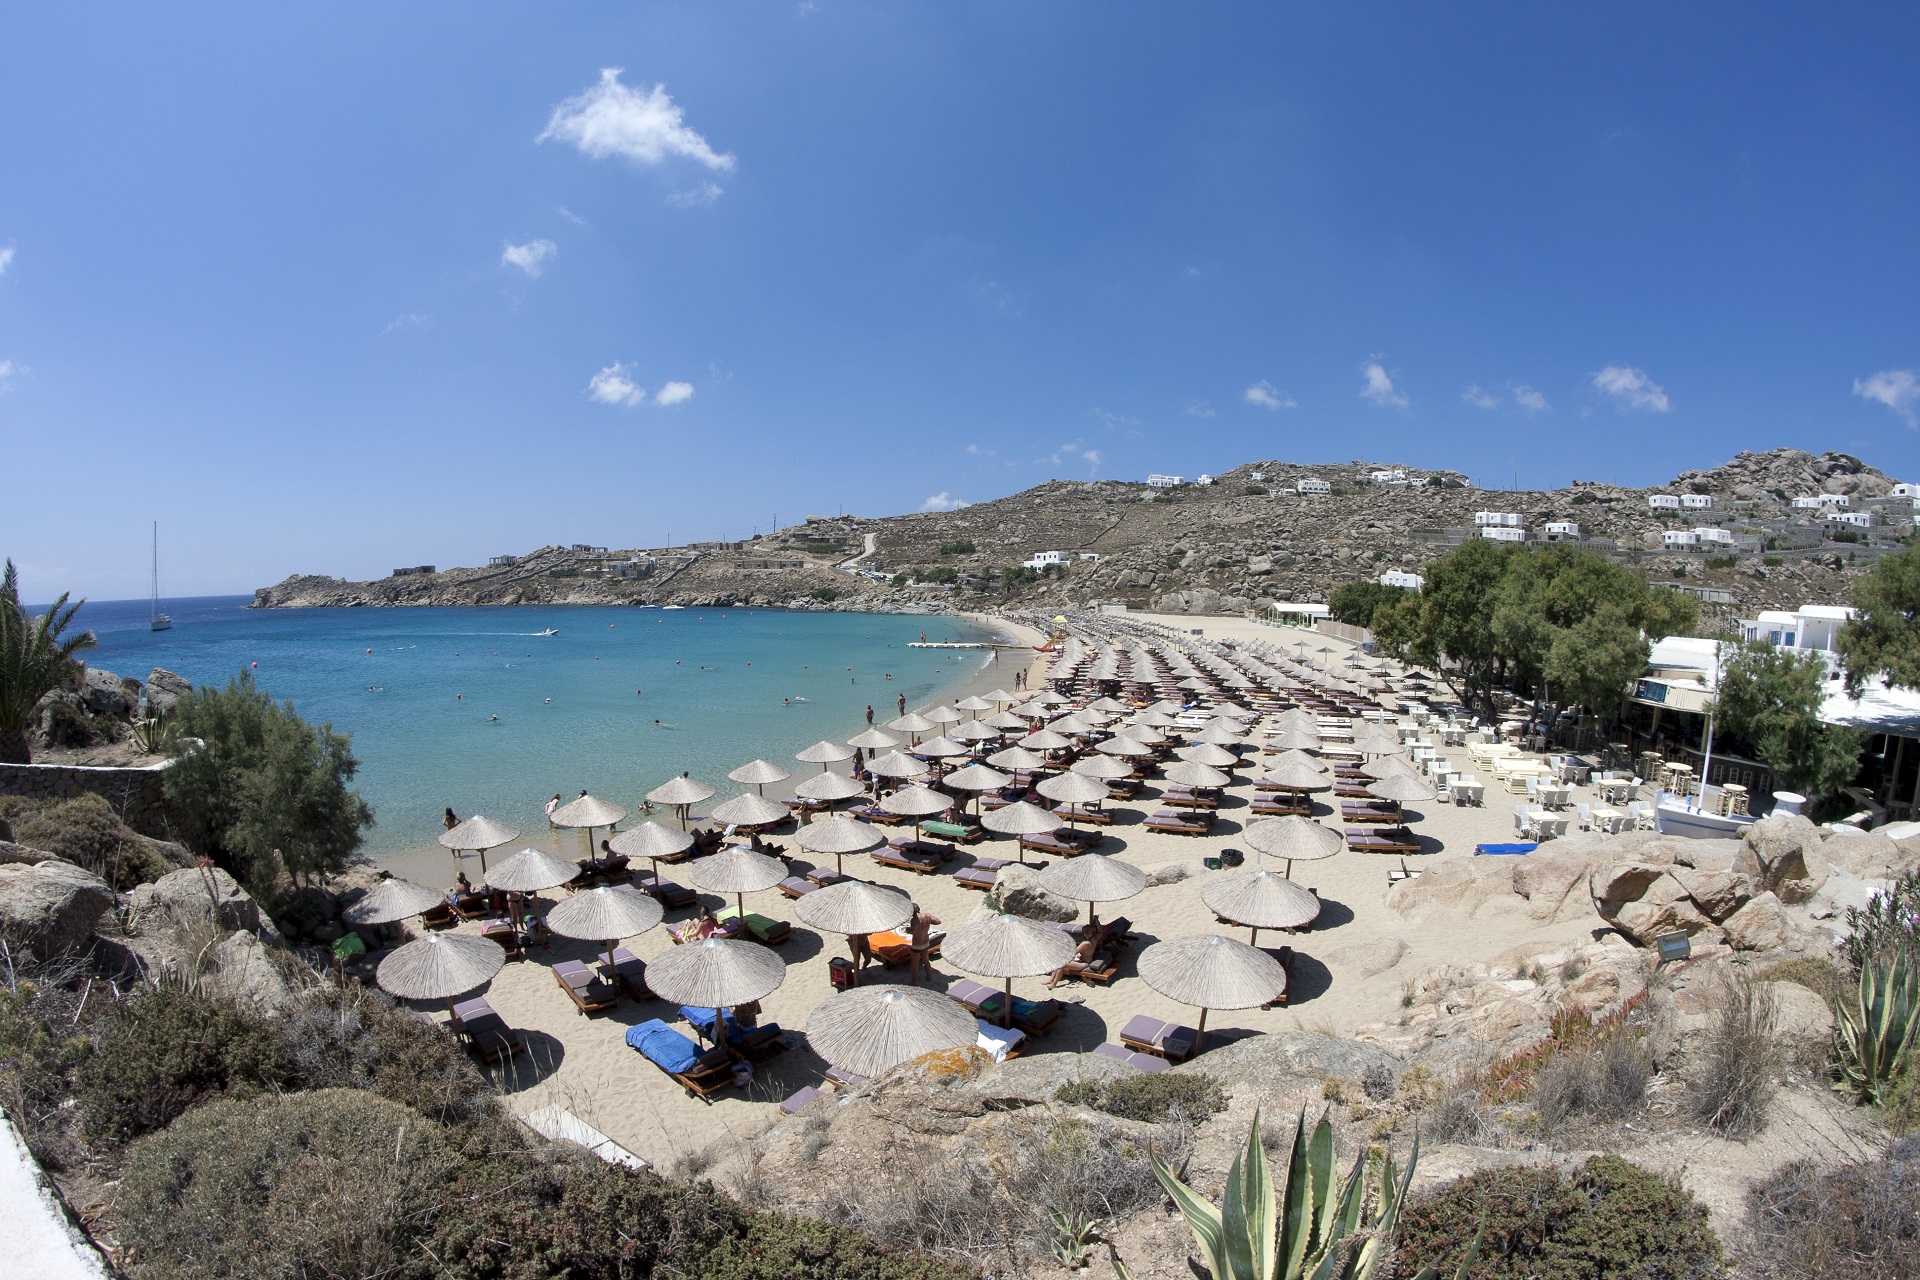 Super paradise beach, Mykonos island, Greece